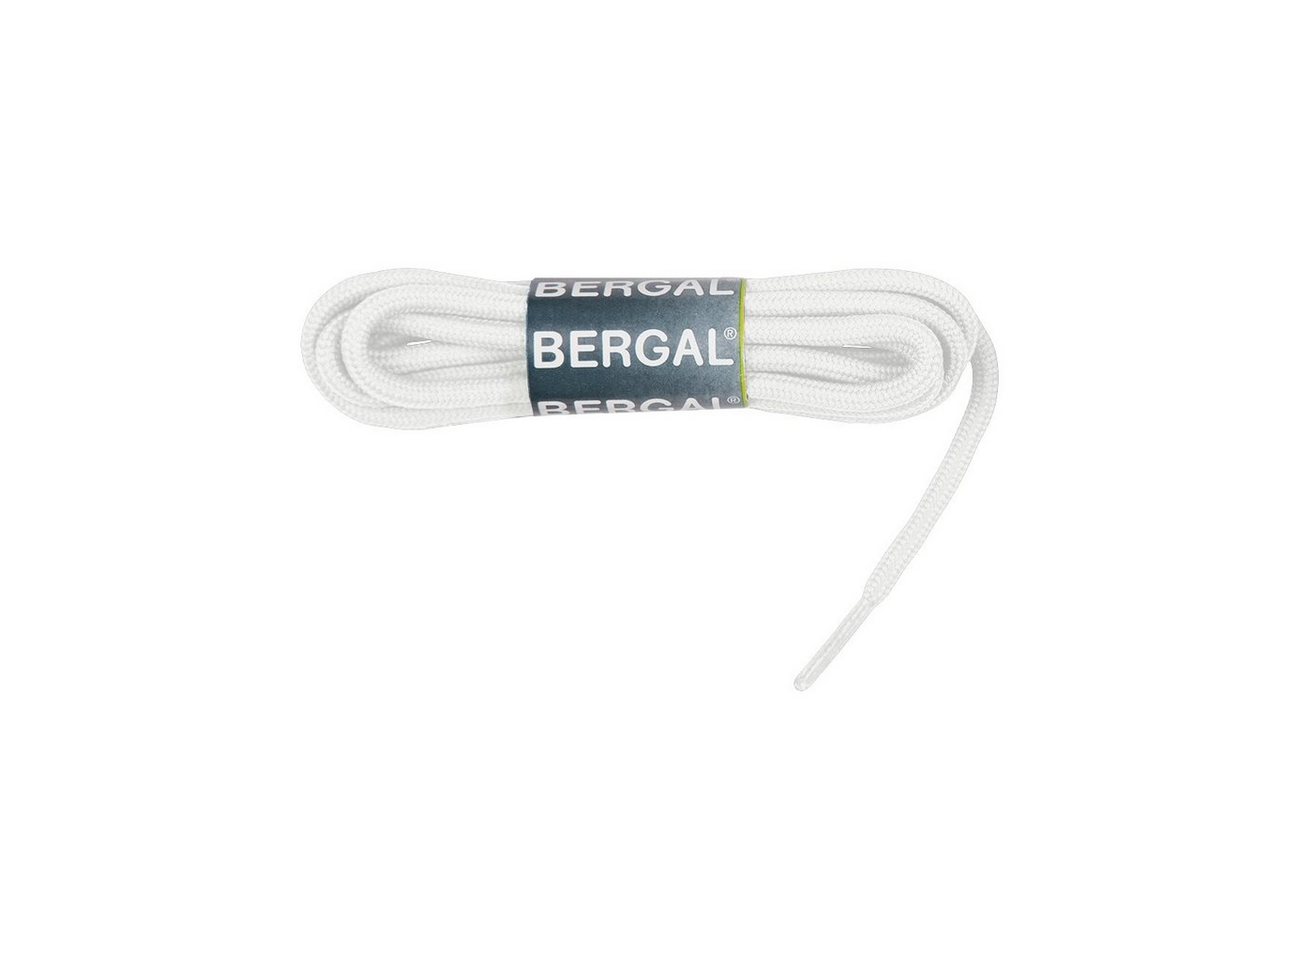 Bergal Schnürsenkel Rope Laces / Runde Sneaker Schnürsenkel von Bergal